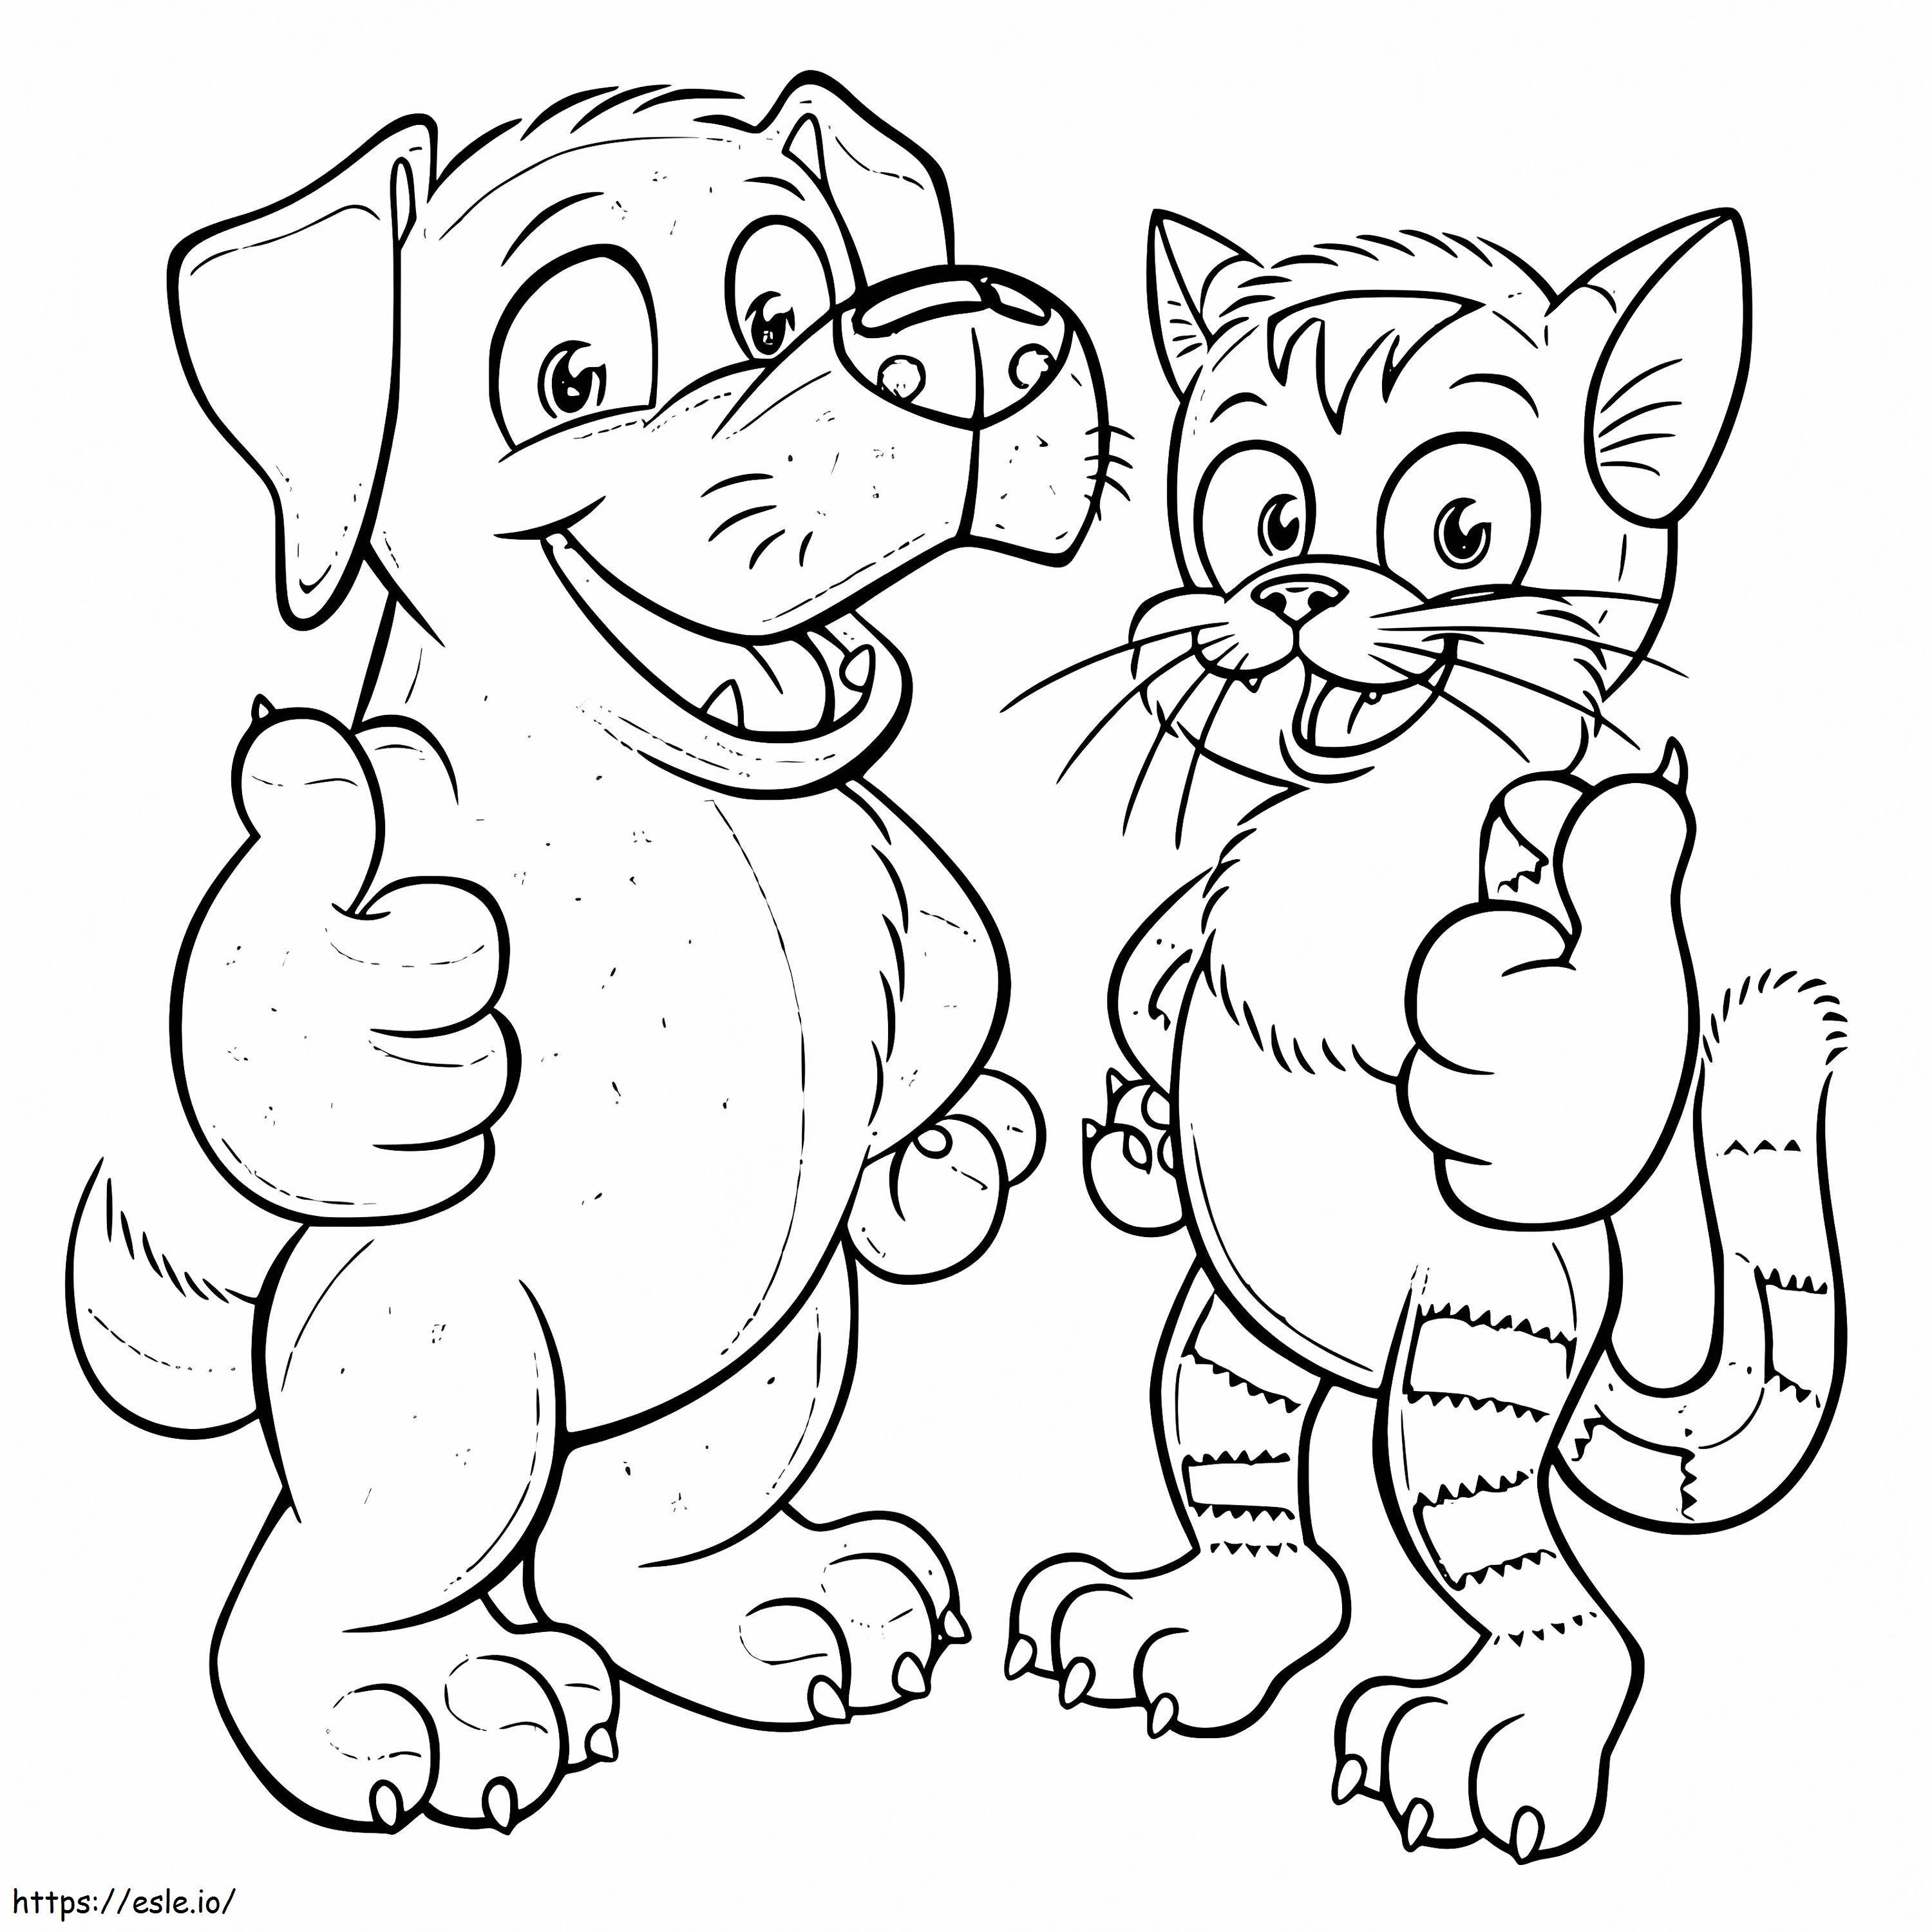 Gato e cachorro de desenho animado para colorir